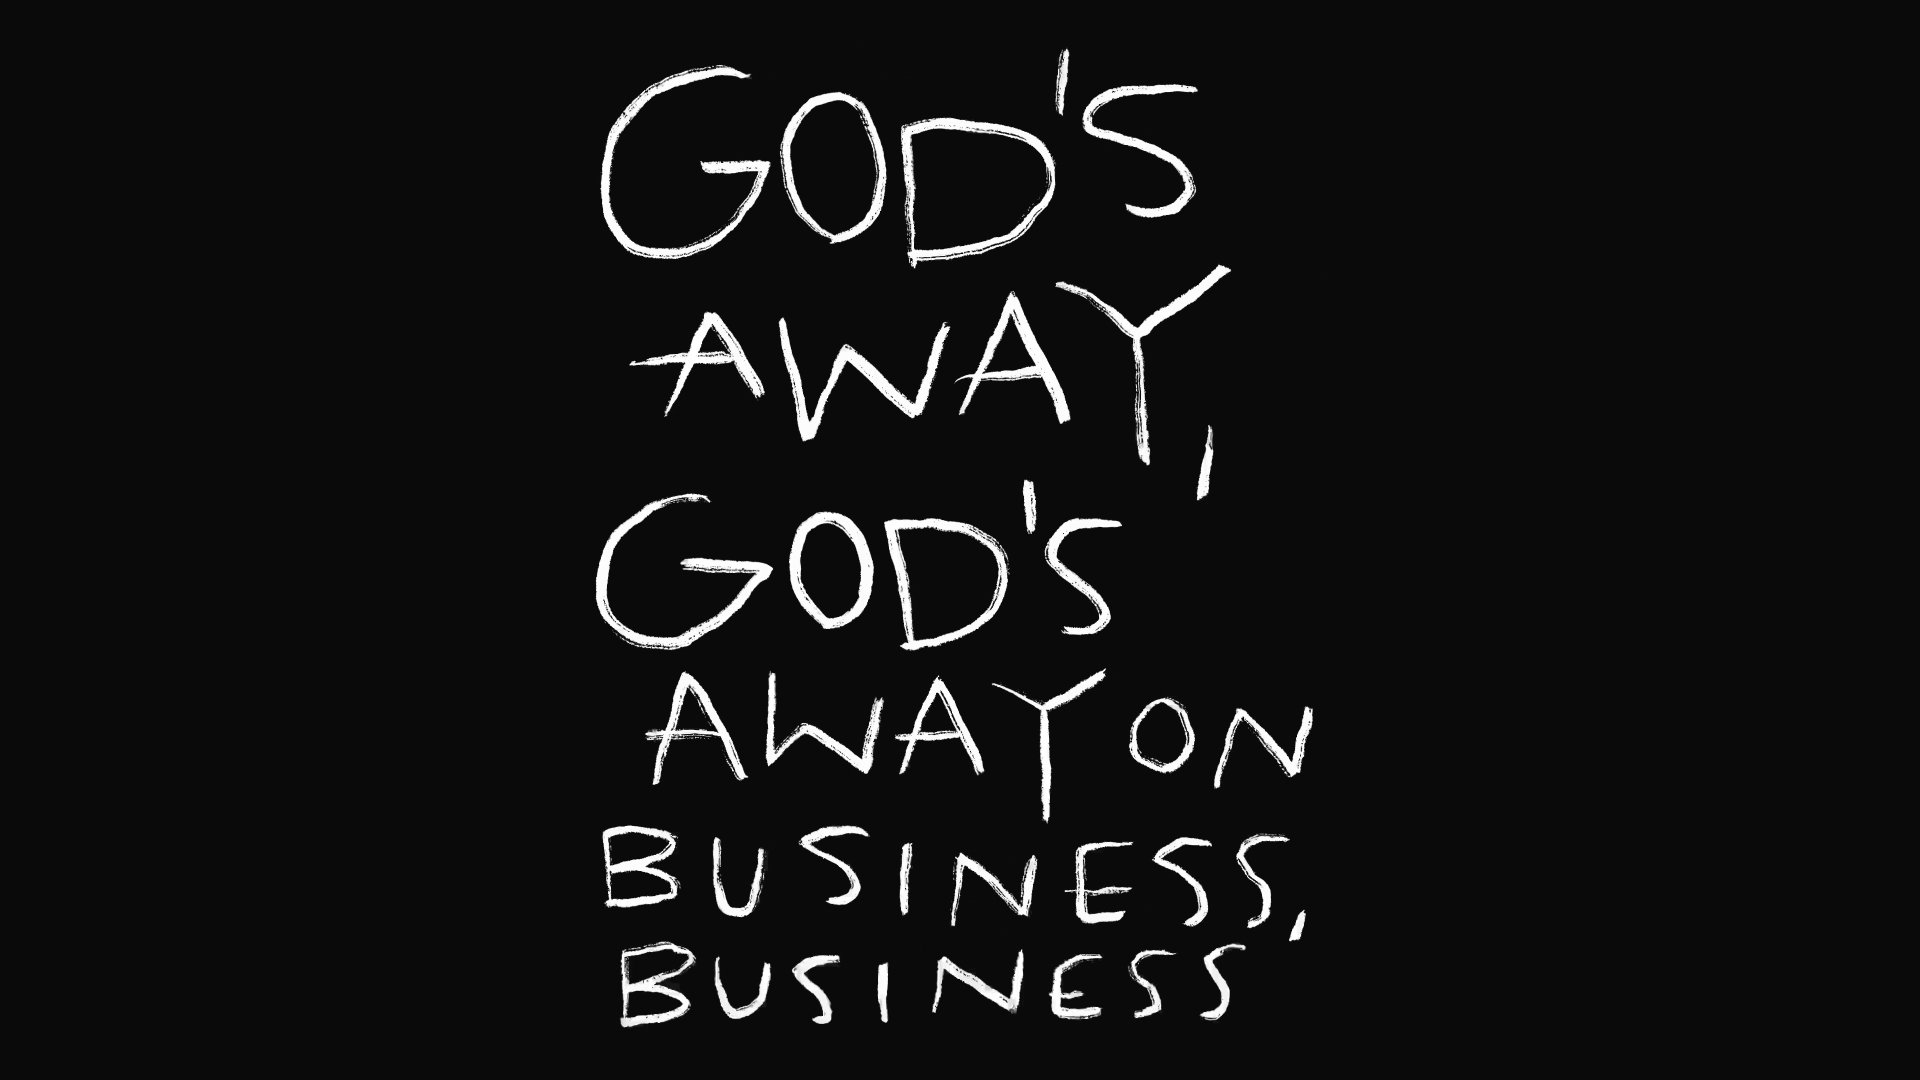 MOTION GRAPHICS DESIGNER - TOM WAITS "GOD'S AWAY ON BUSINESS"